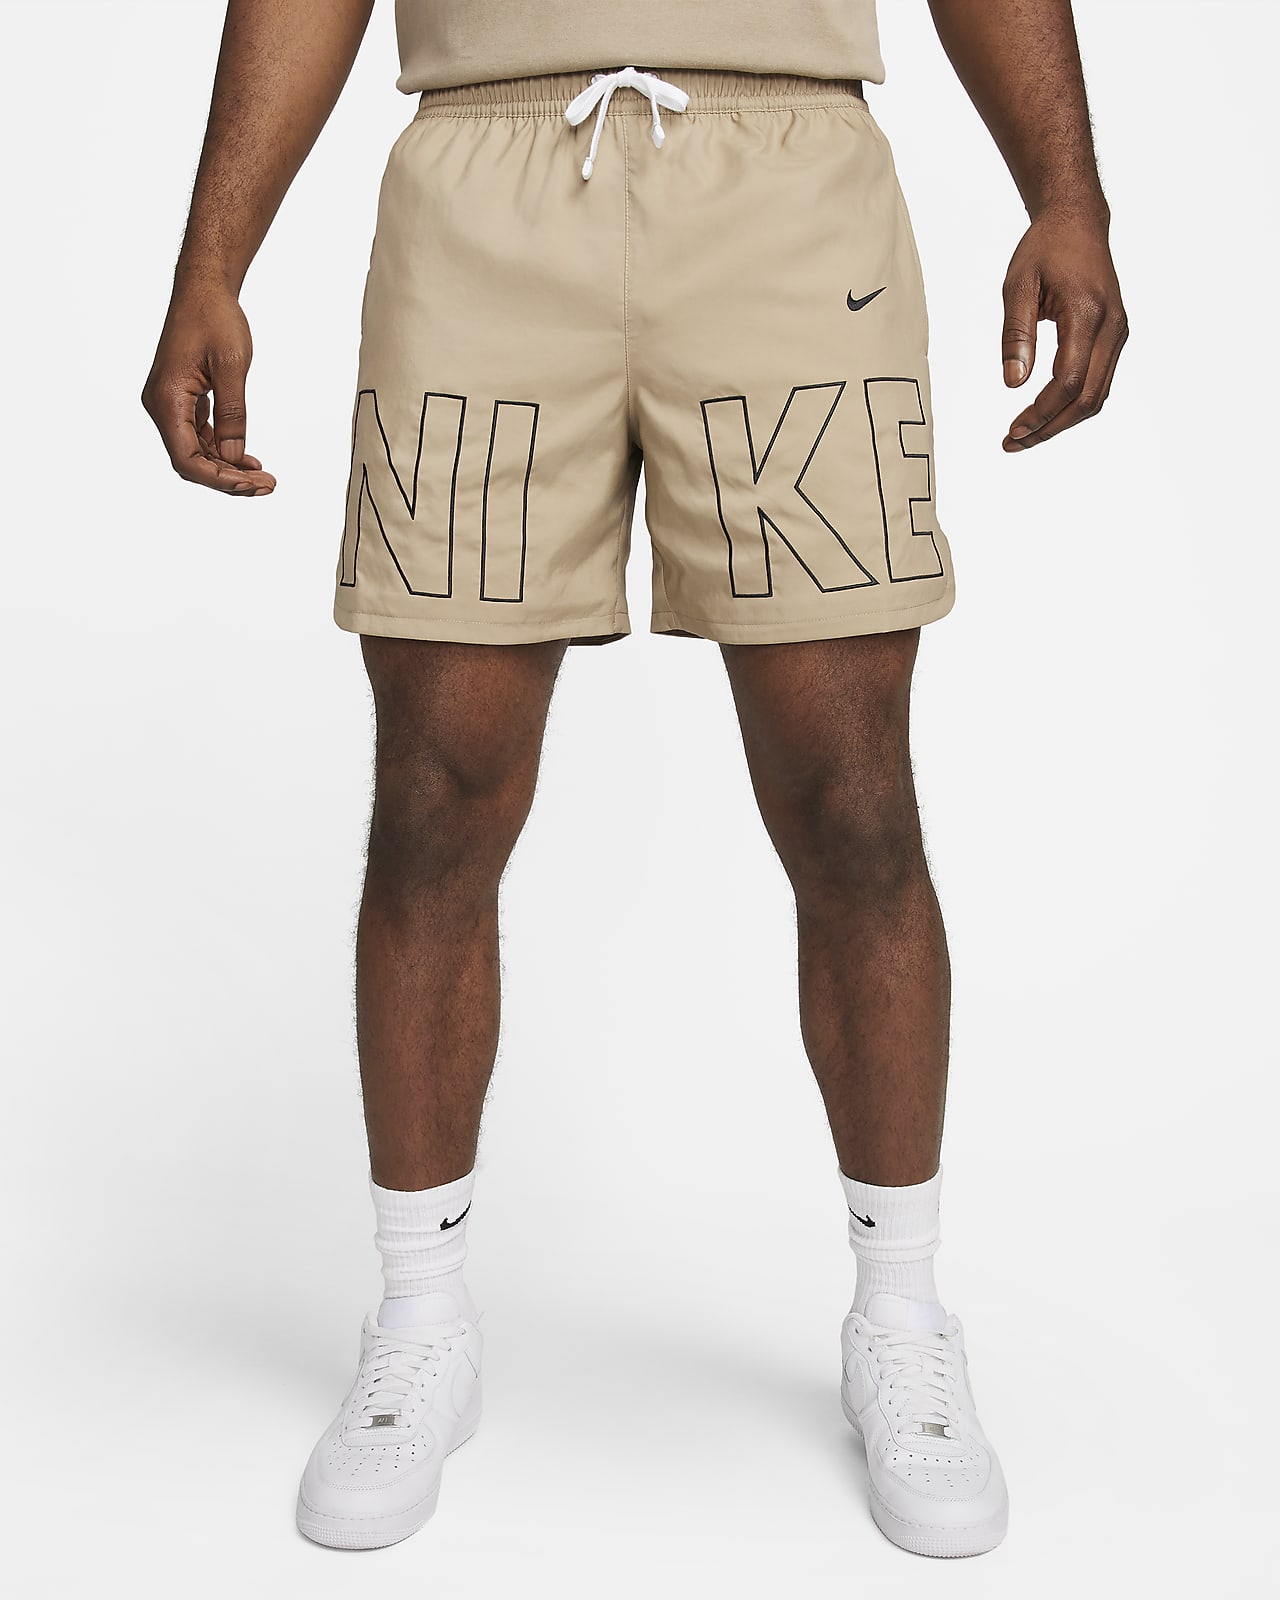 Shorts Nike Sportswear Woven Flow Masculino - Compre Agora